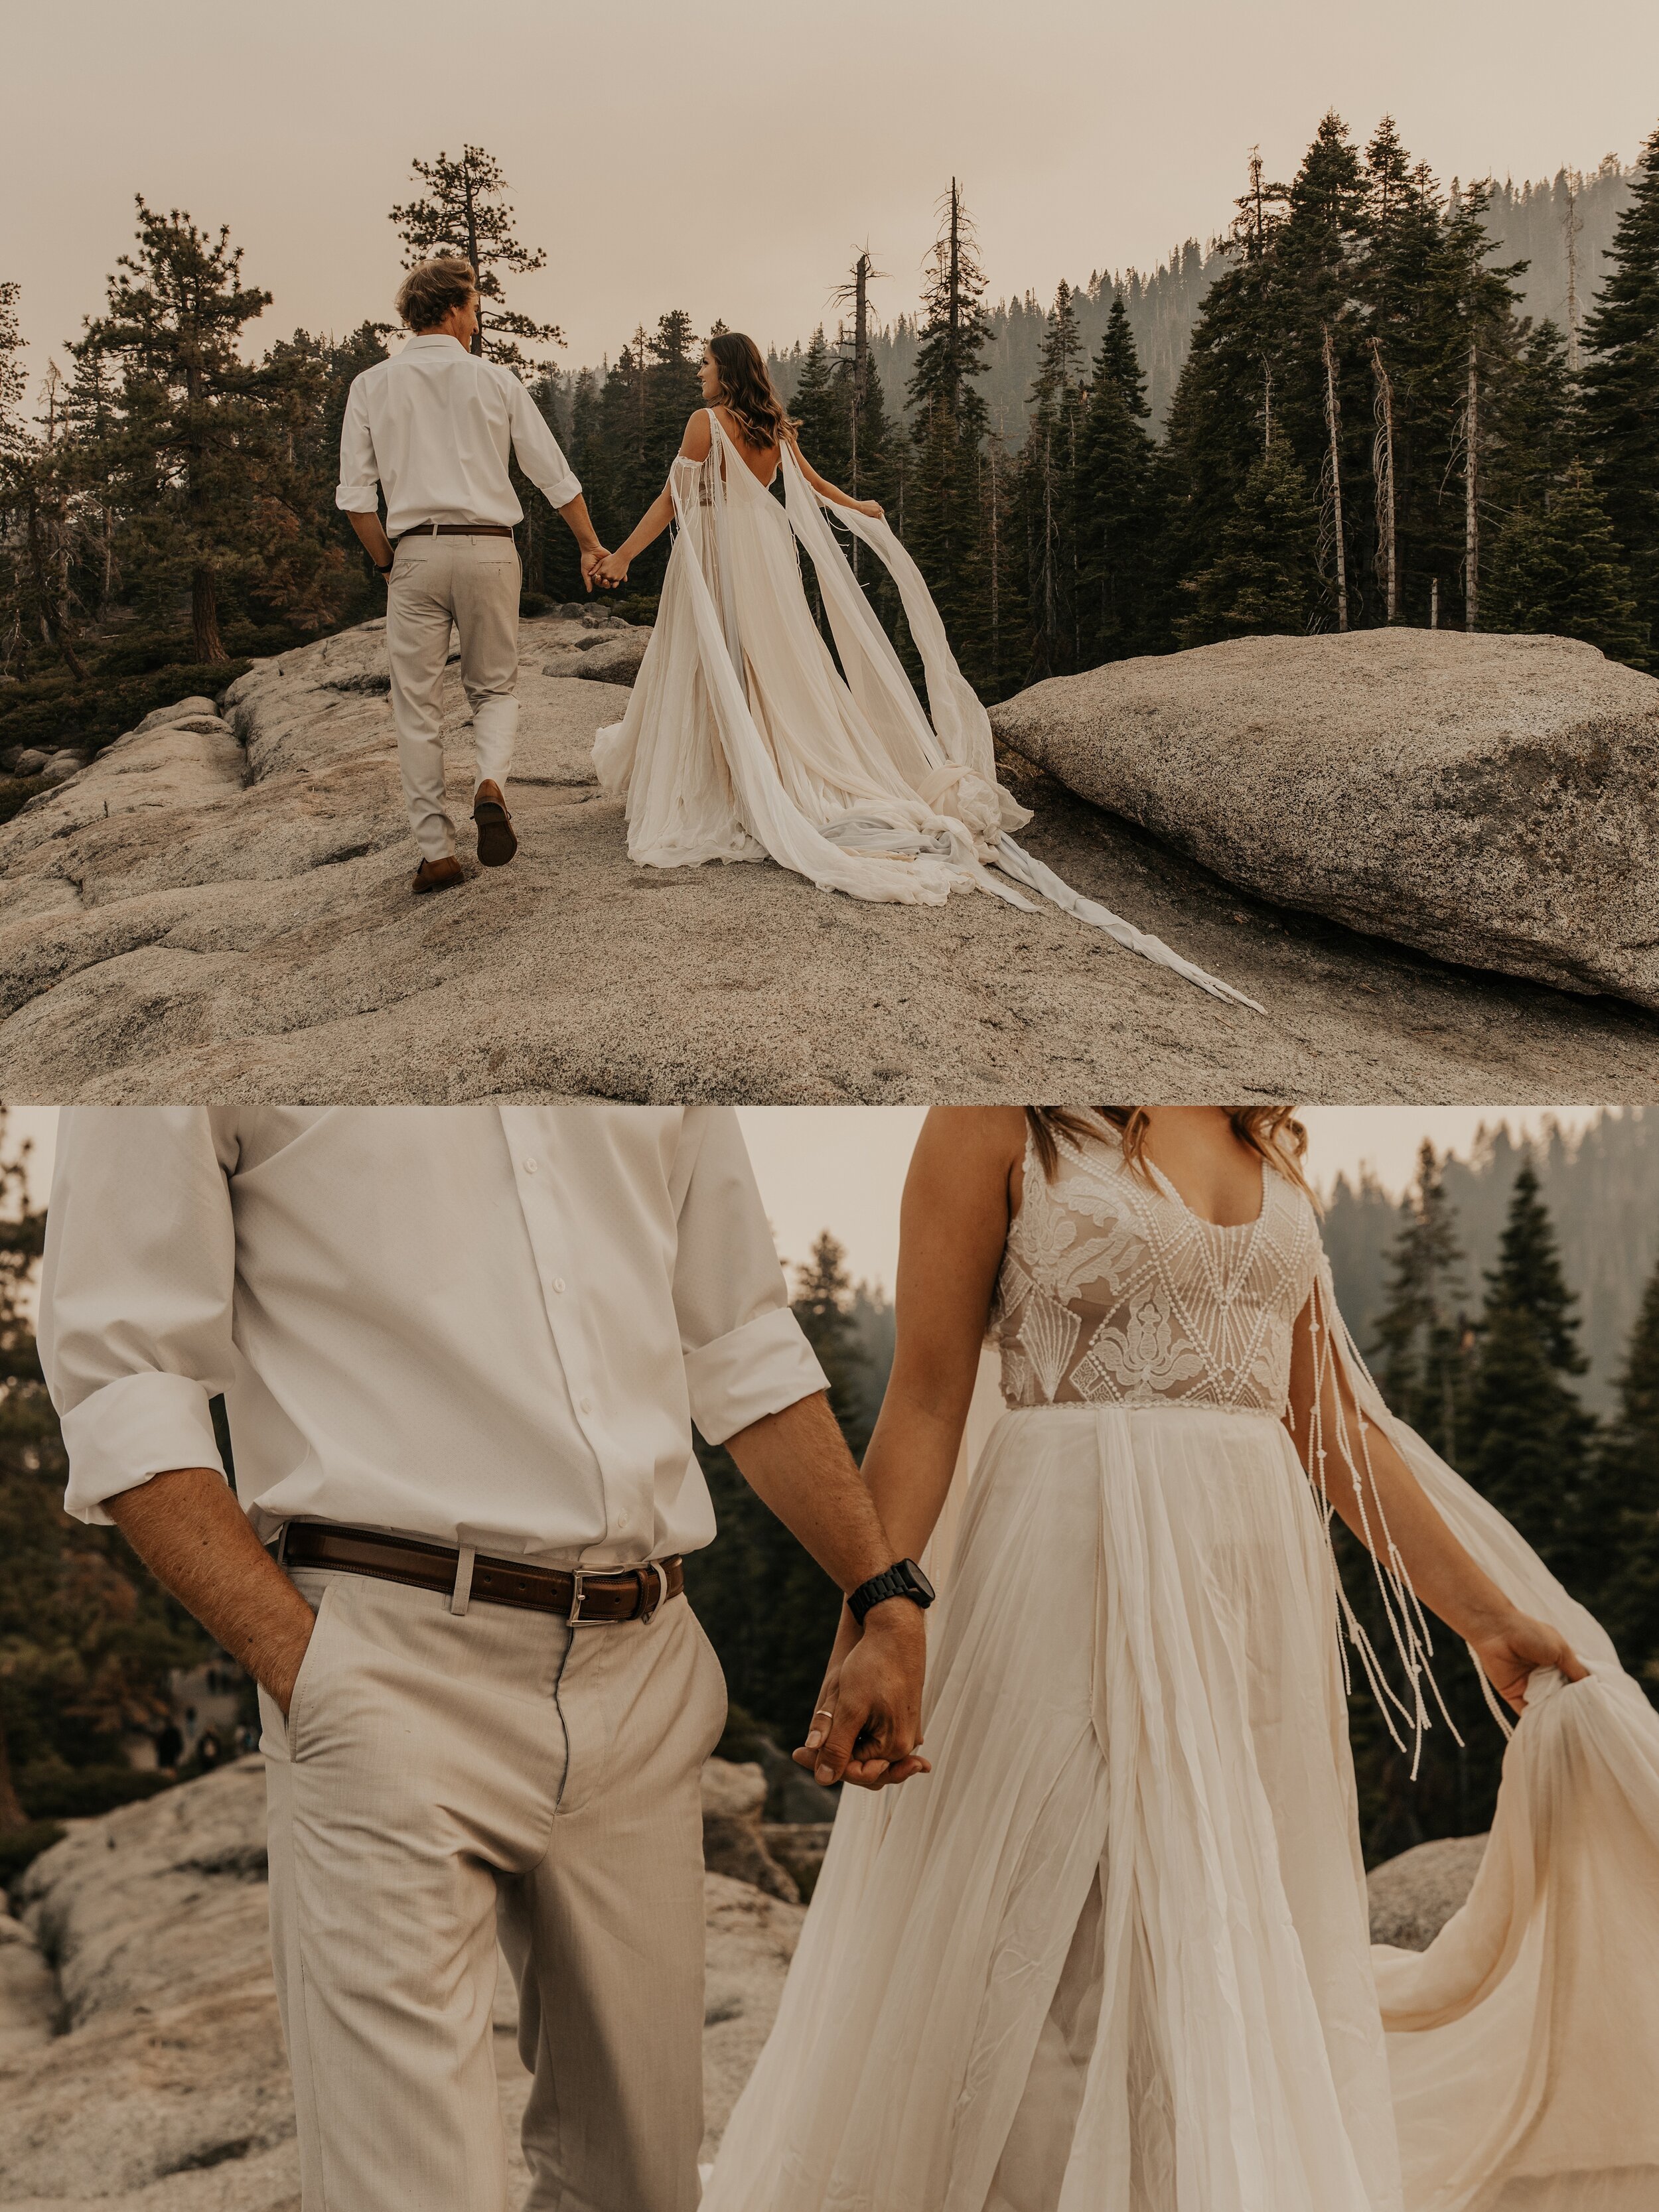 jessika-christine-photography-yosemite-couples-outdoor-adventurous-session (12).jpg